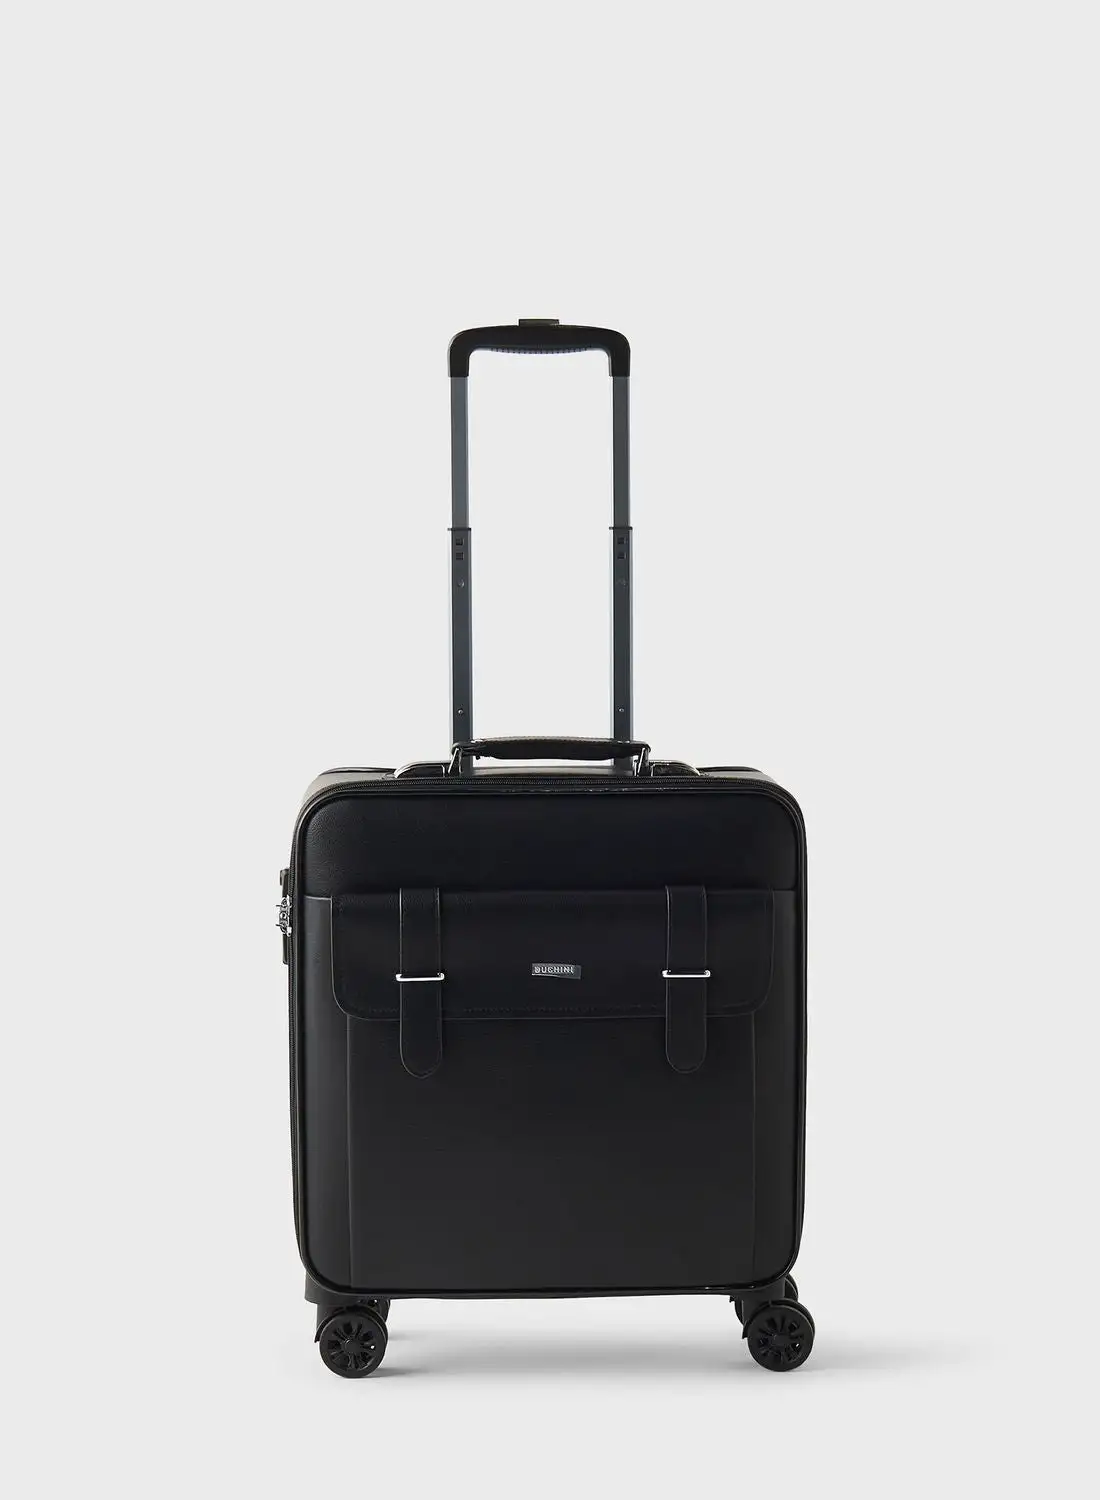 DUCHINI Logo Detail Carry On Luggage